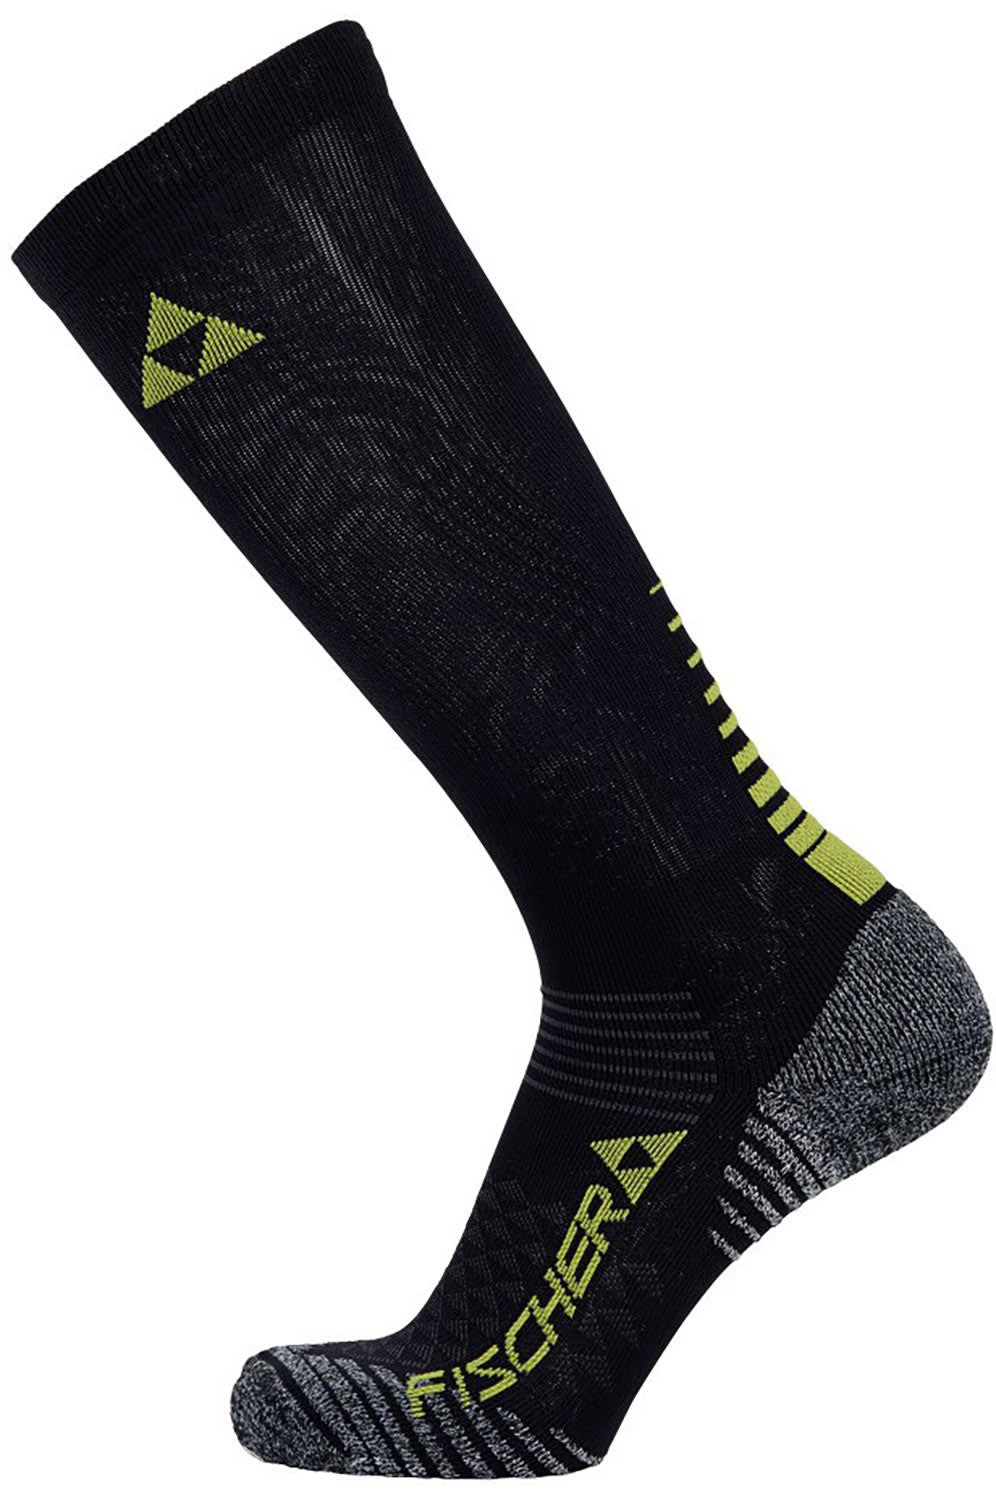 xc ski socks 2